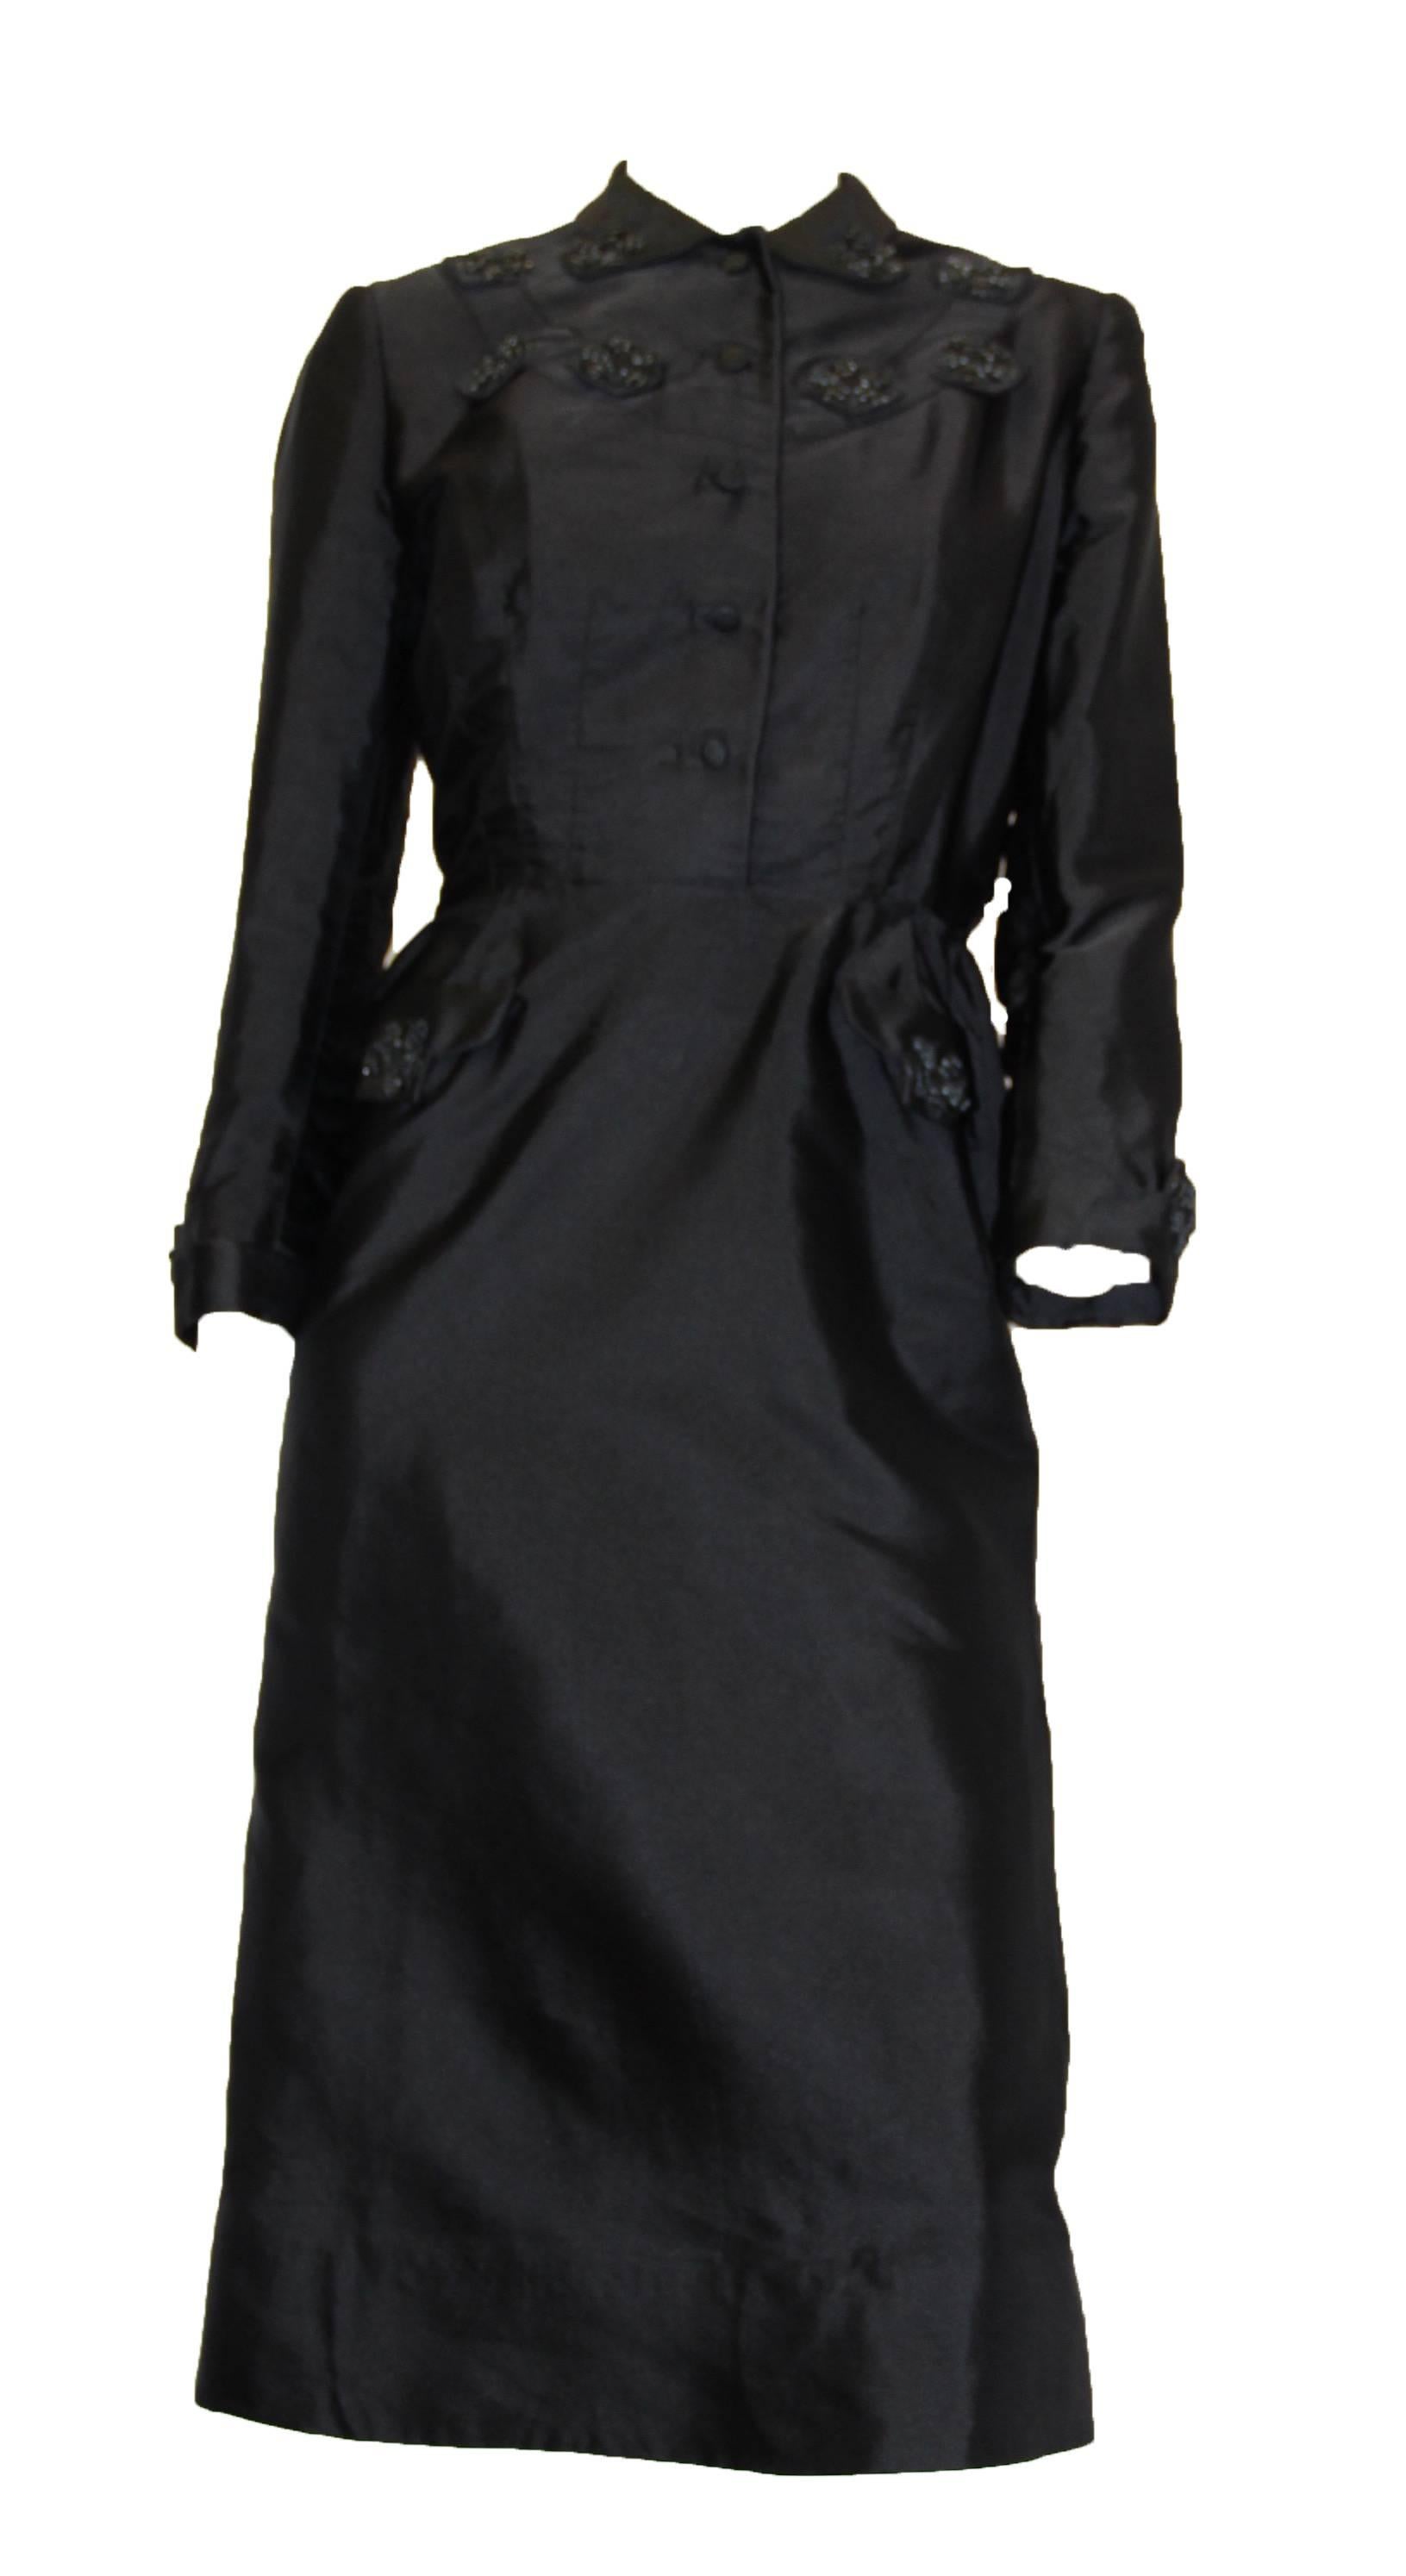 50's Hattie Carnegie black silk faille evening dress with embellishments. 